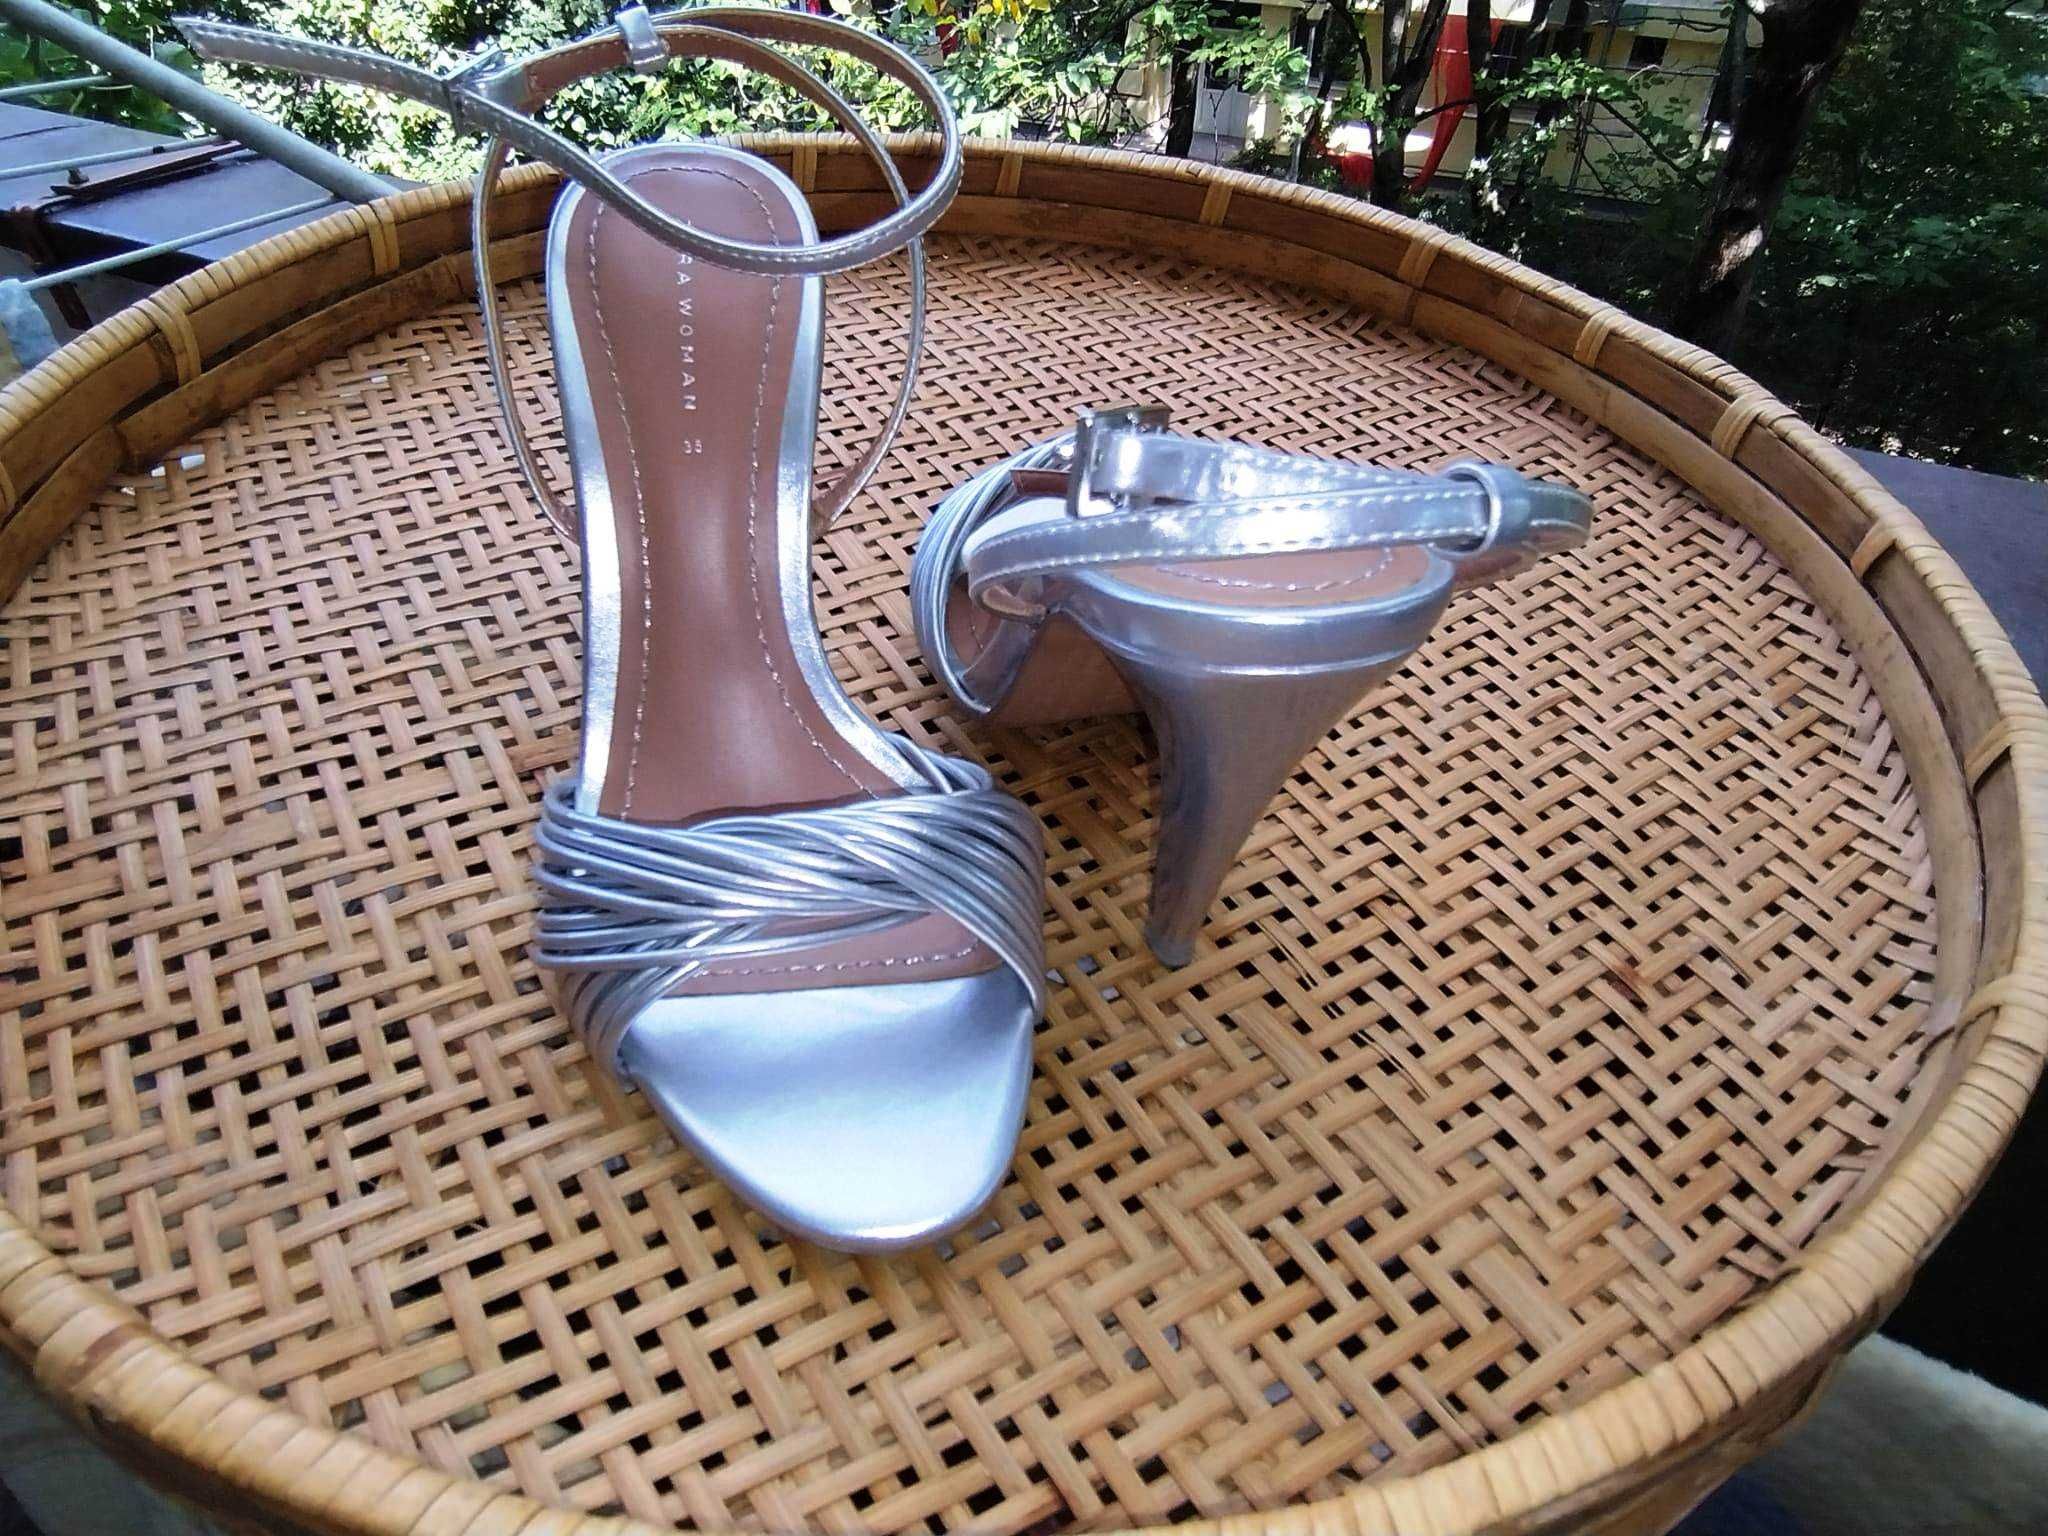 Sandale elegante